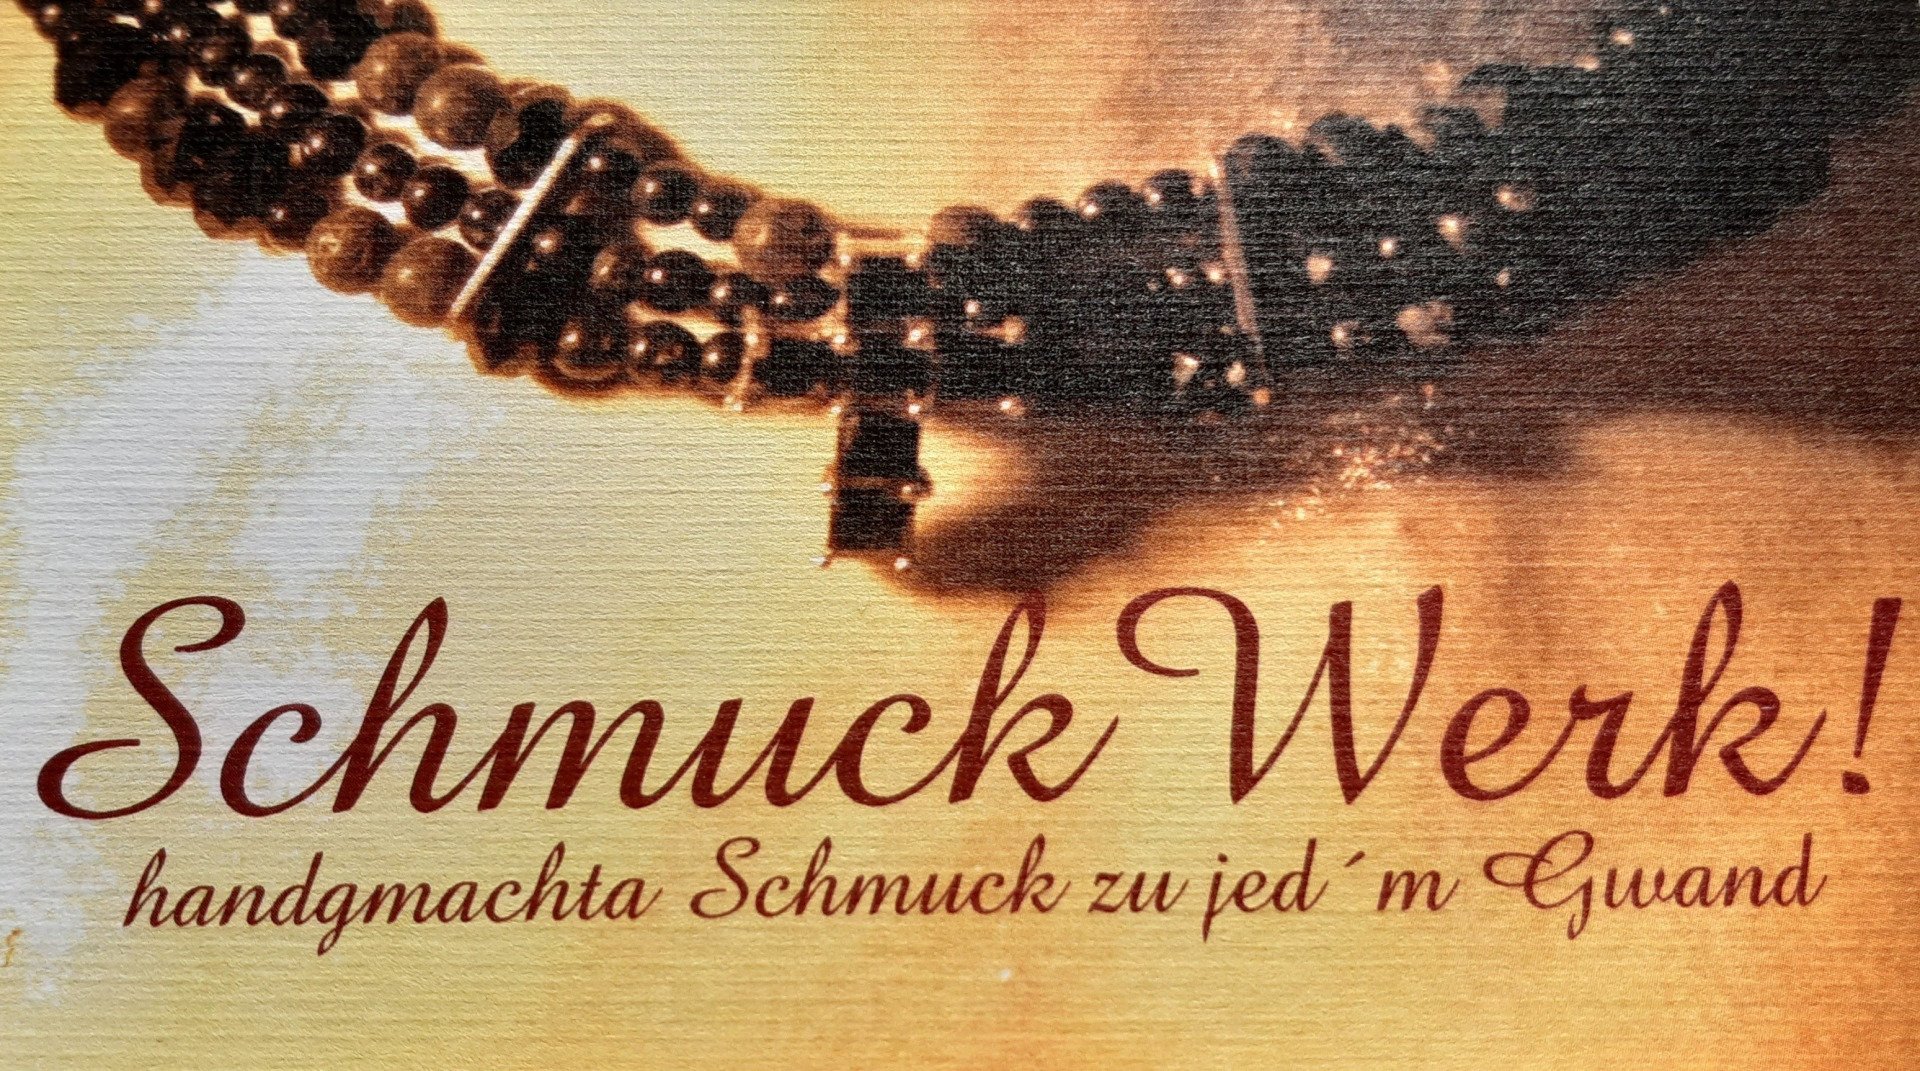 Schmuckwerk_logo